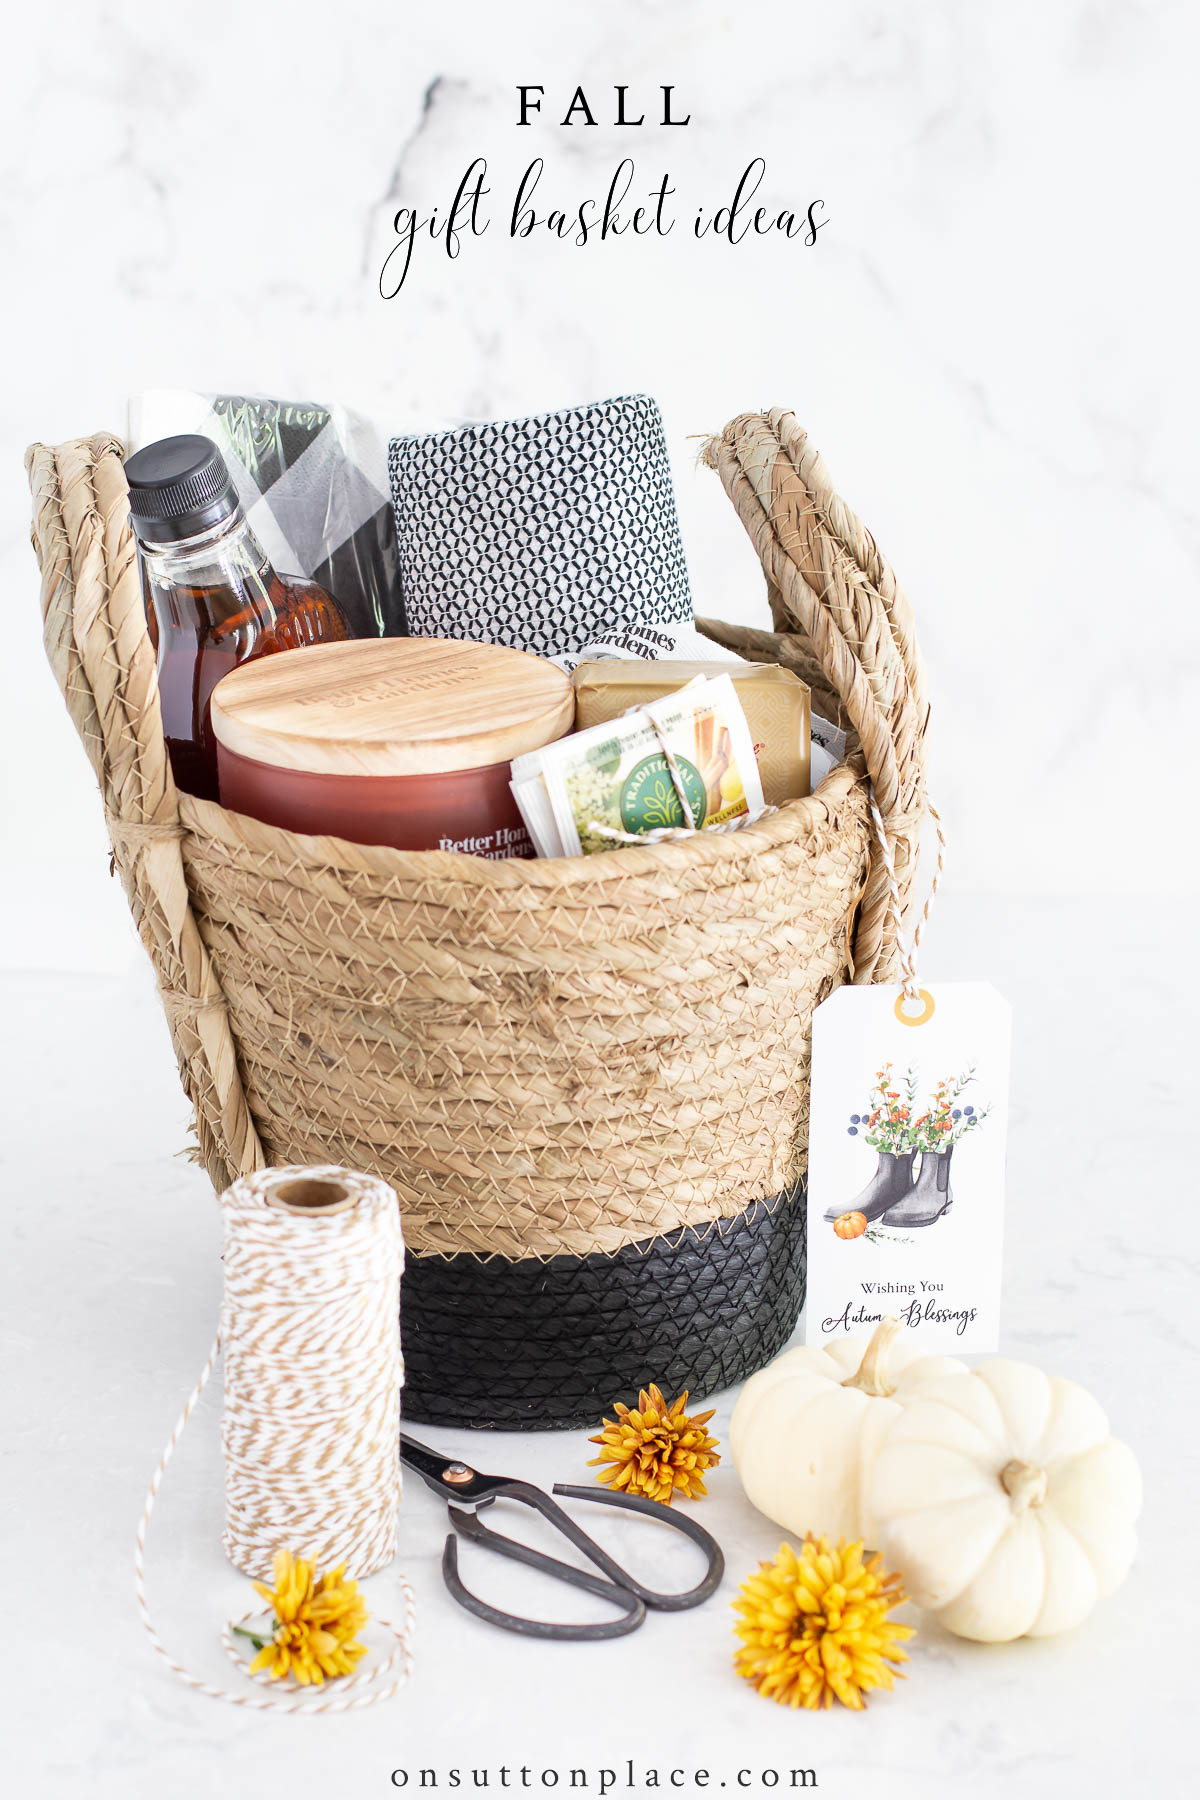 Gift Baskets | Weav Spokane - Locally Sourced Gift Baskets